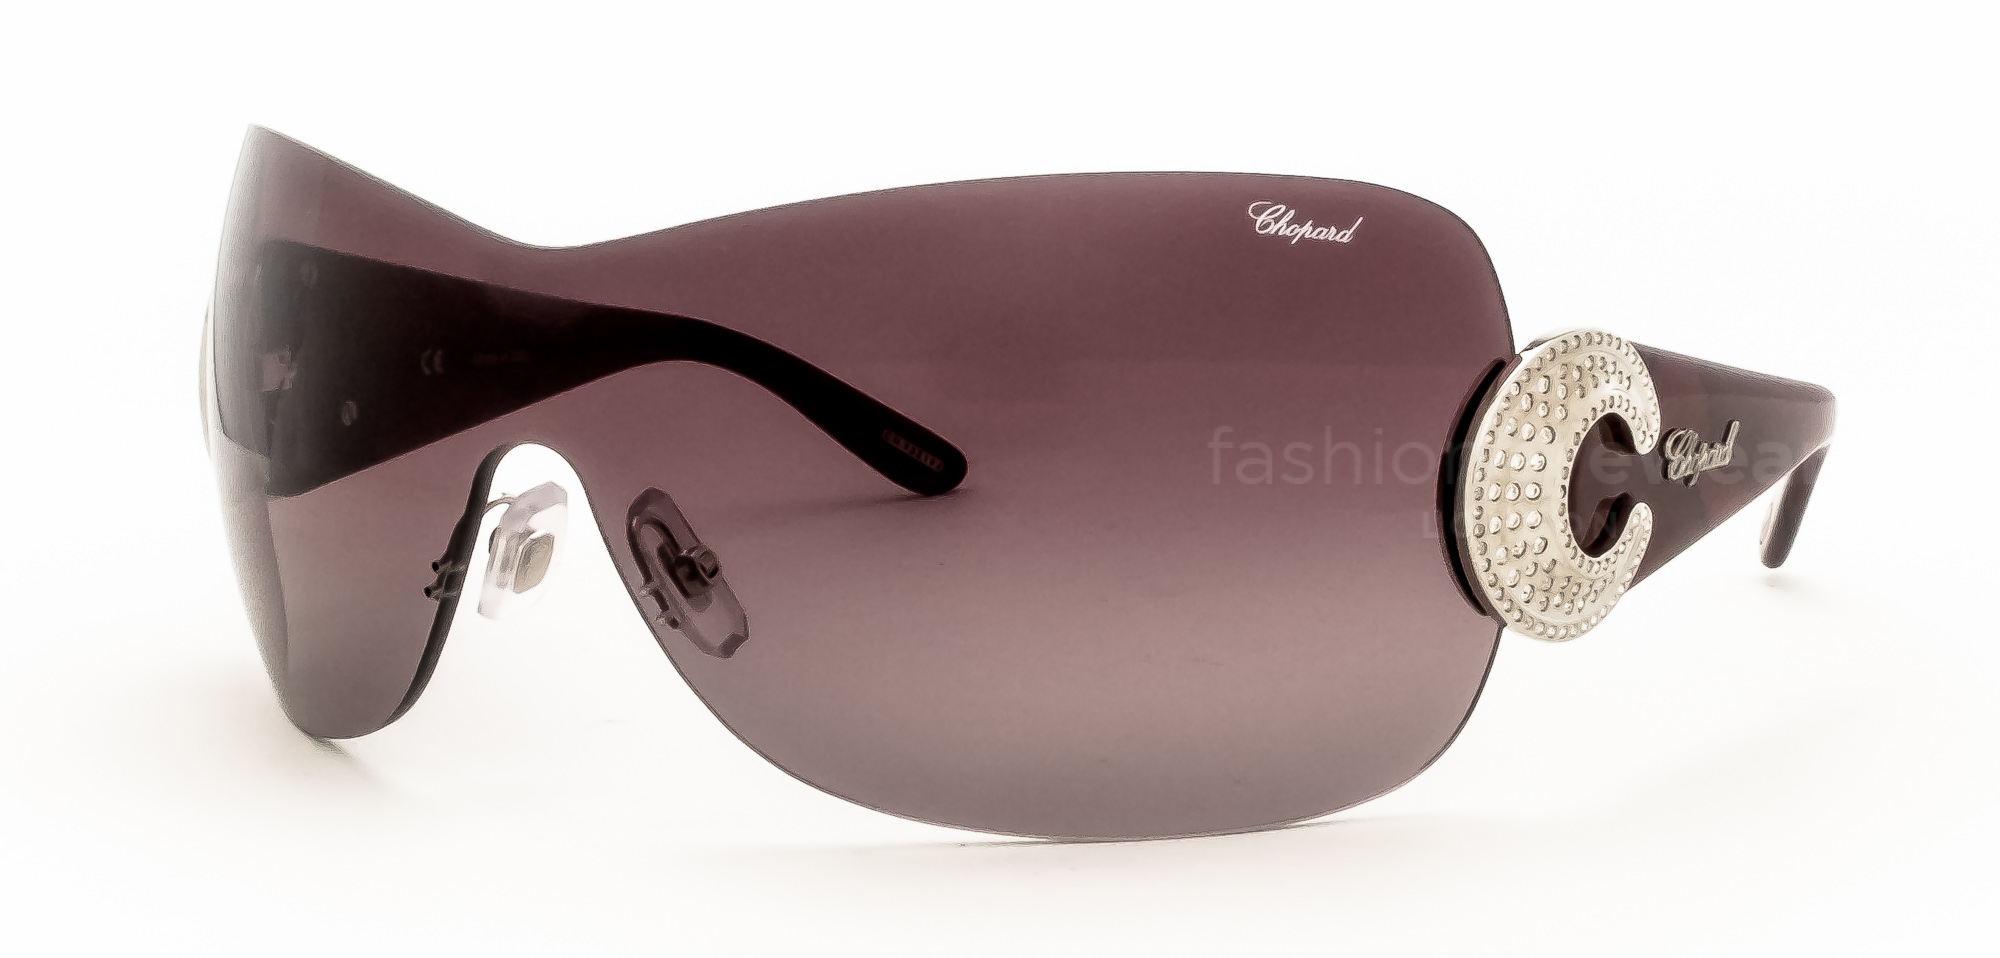 Chopard Sunglasses - Luxury Designerware Sunglasses